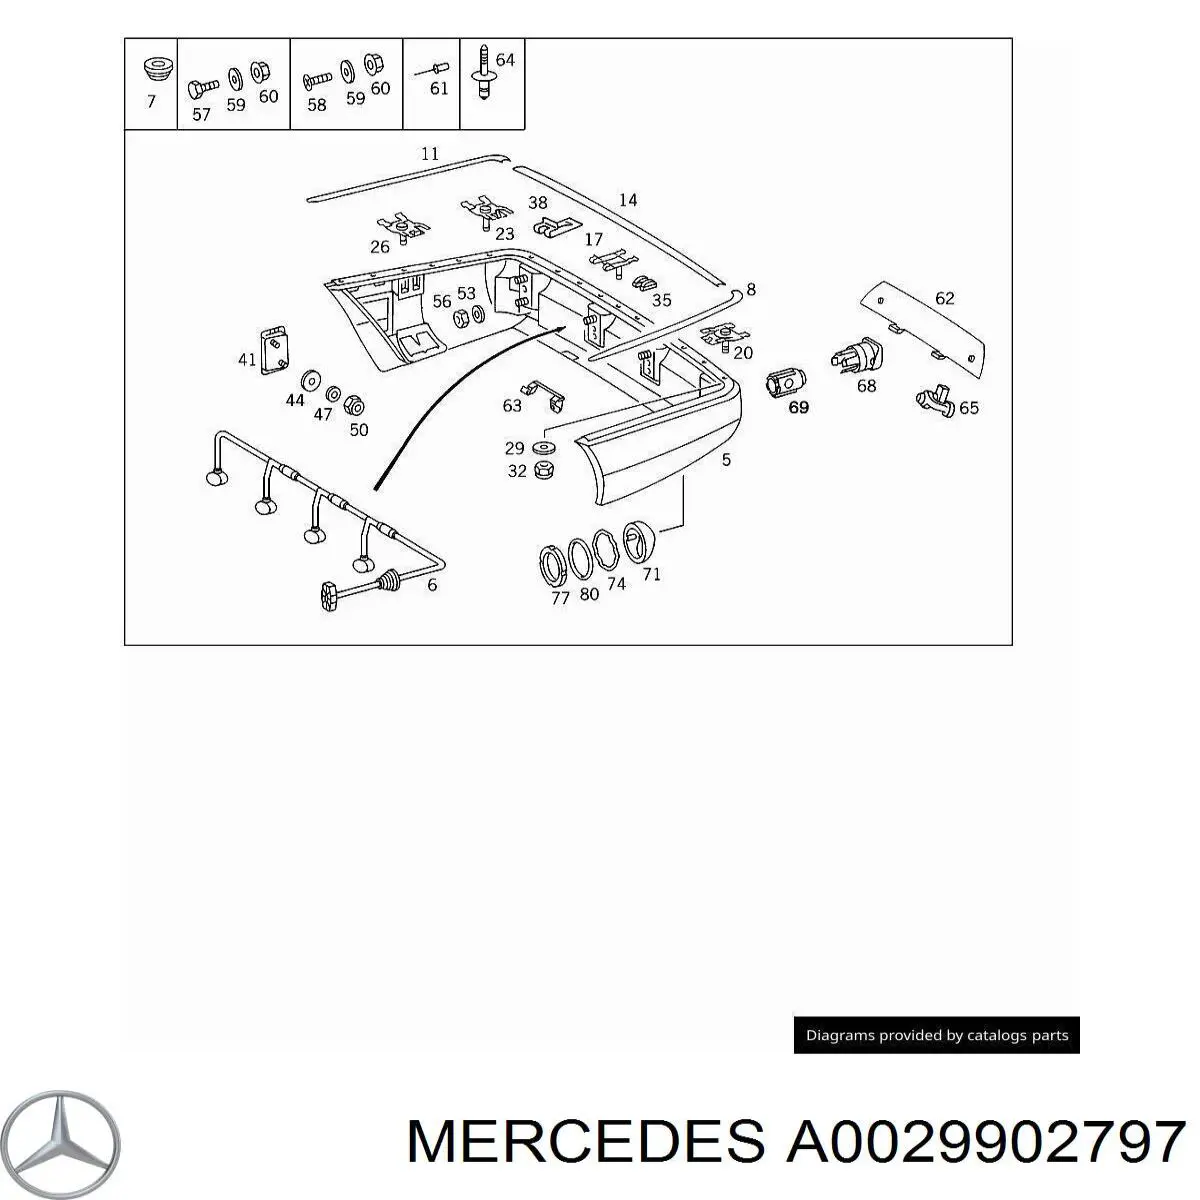 0029902797 Mercedes 